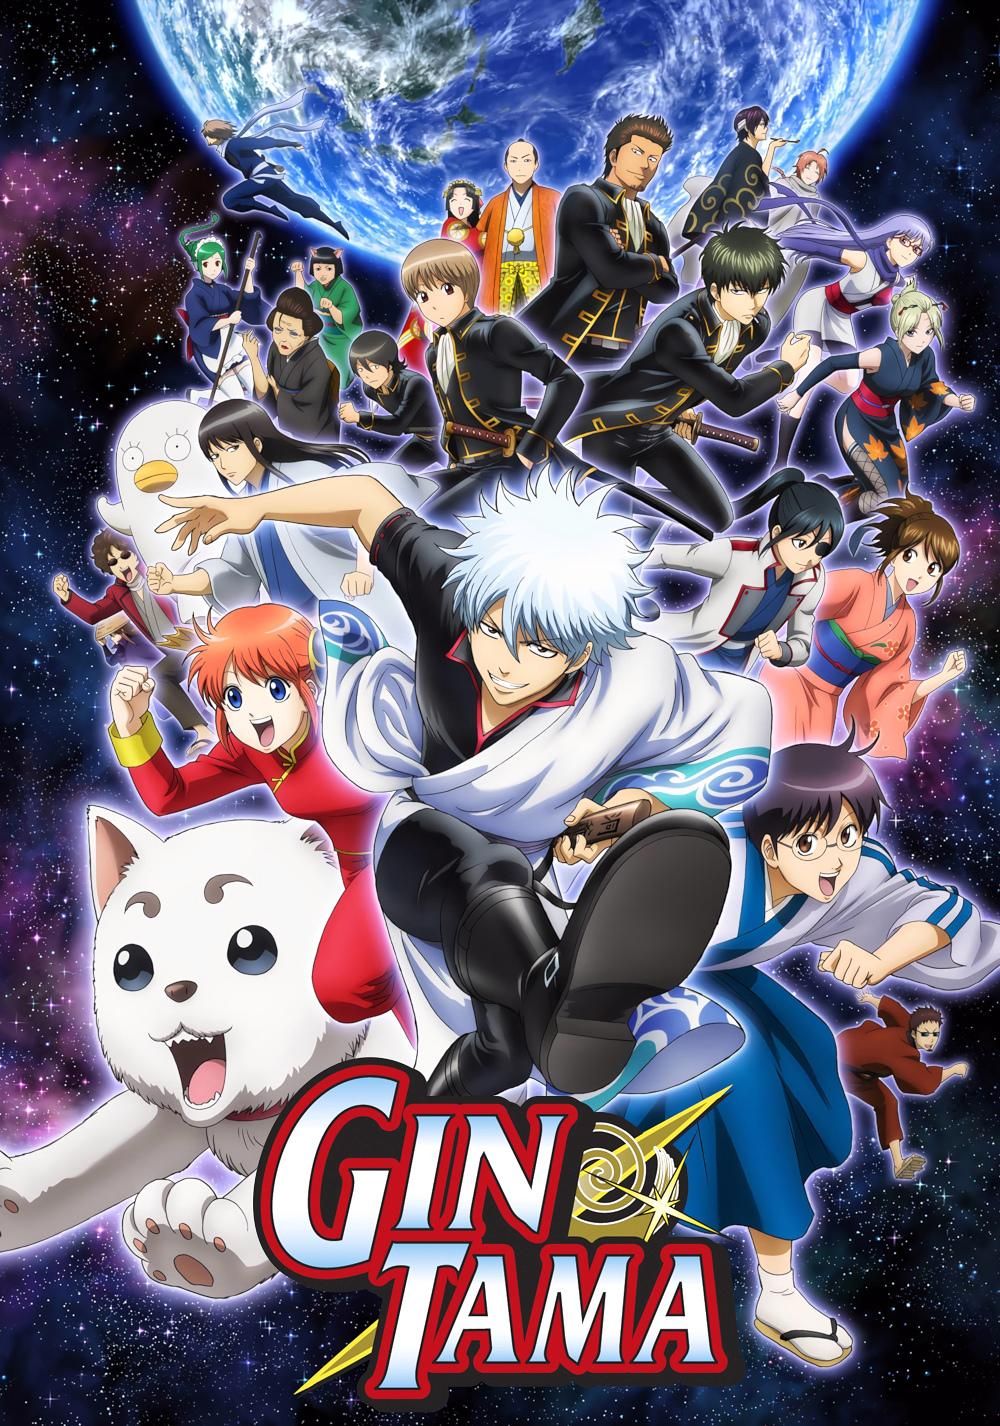 Kanon 2006 | Anime shows, Anime images, Anime